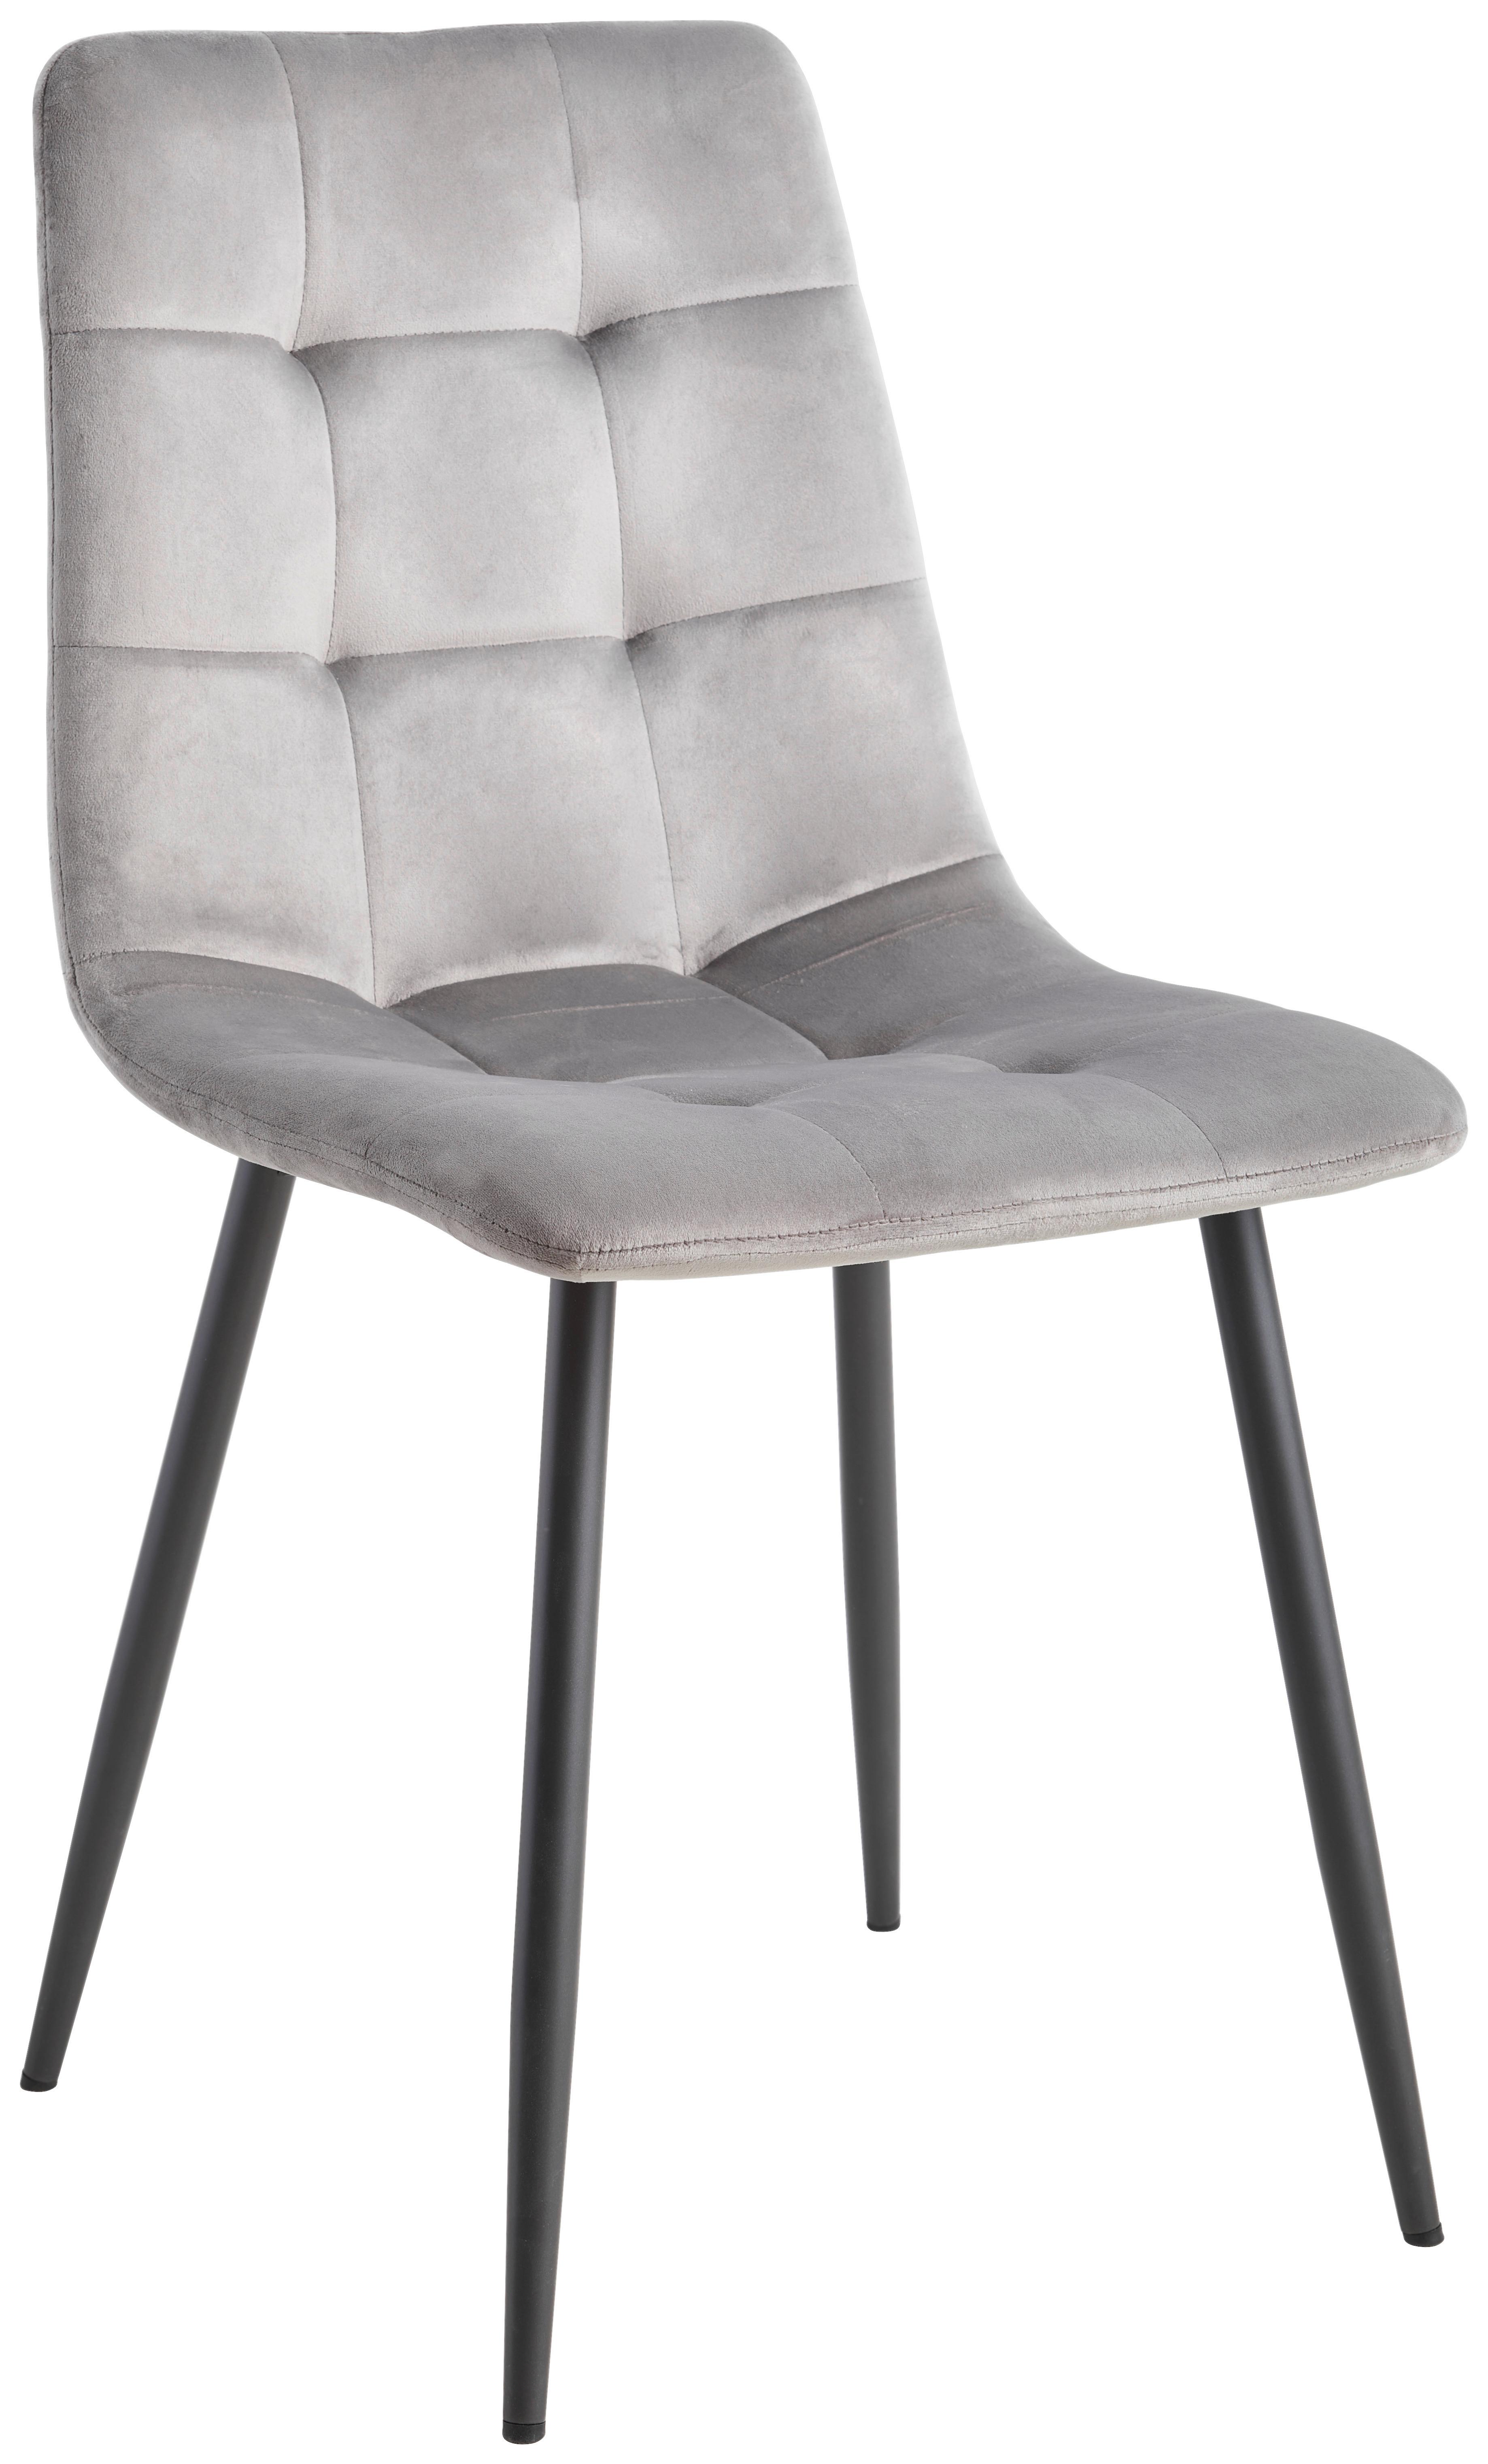 Stuhl Sit Hellgrau Sit - Grau, MODERN, Textil/Metall (44/87/54cm) - P & B